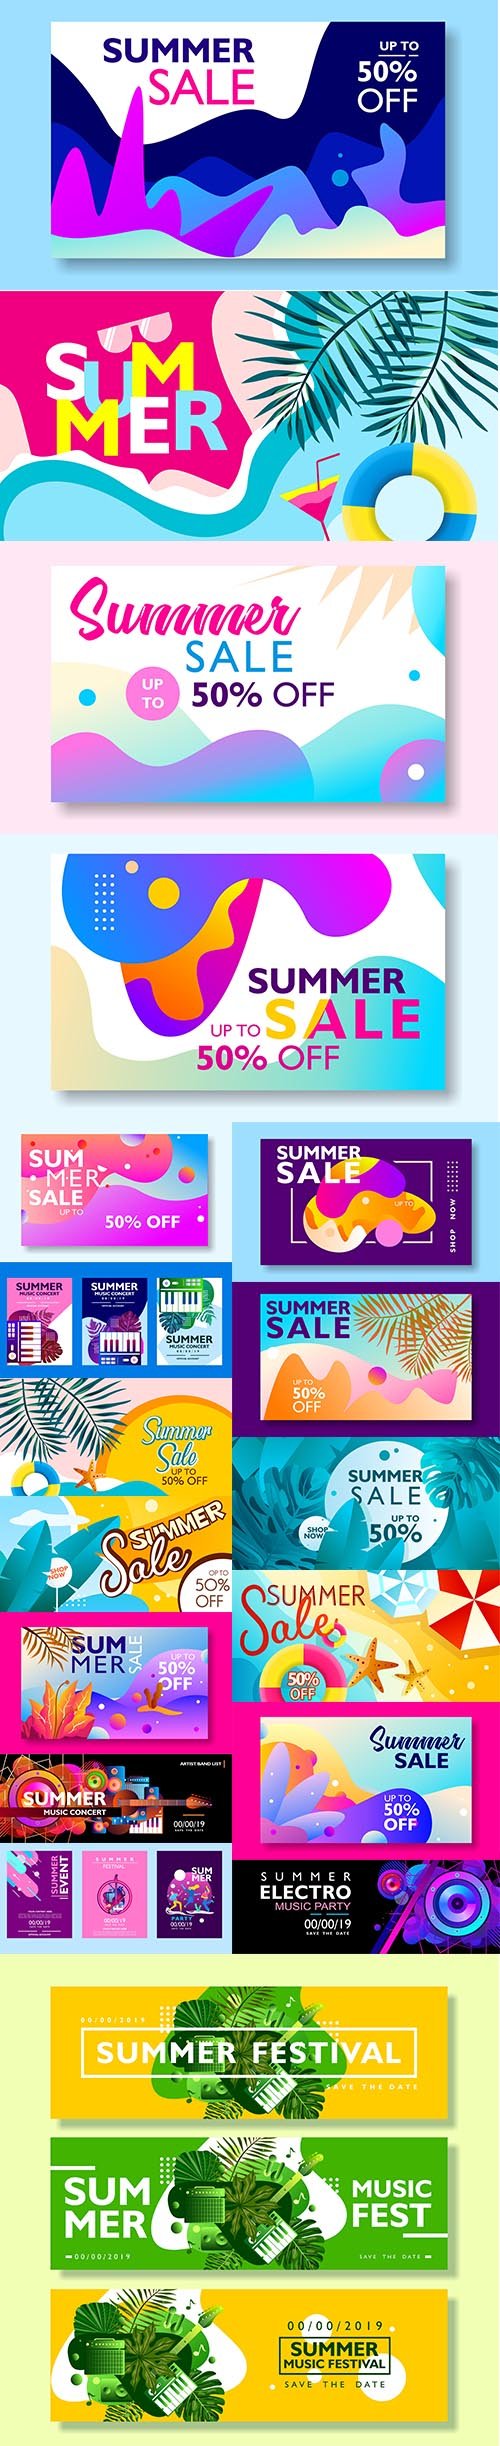 Summer Sale Banner Promotion with Colorful Landscape